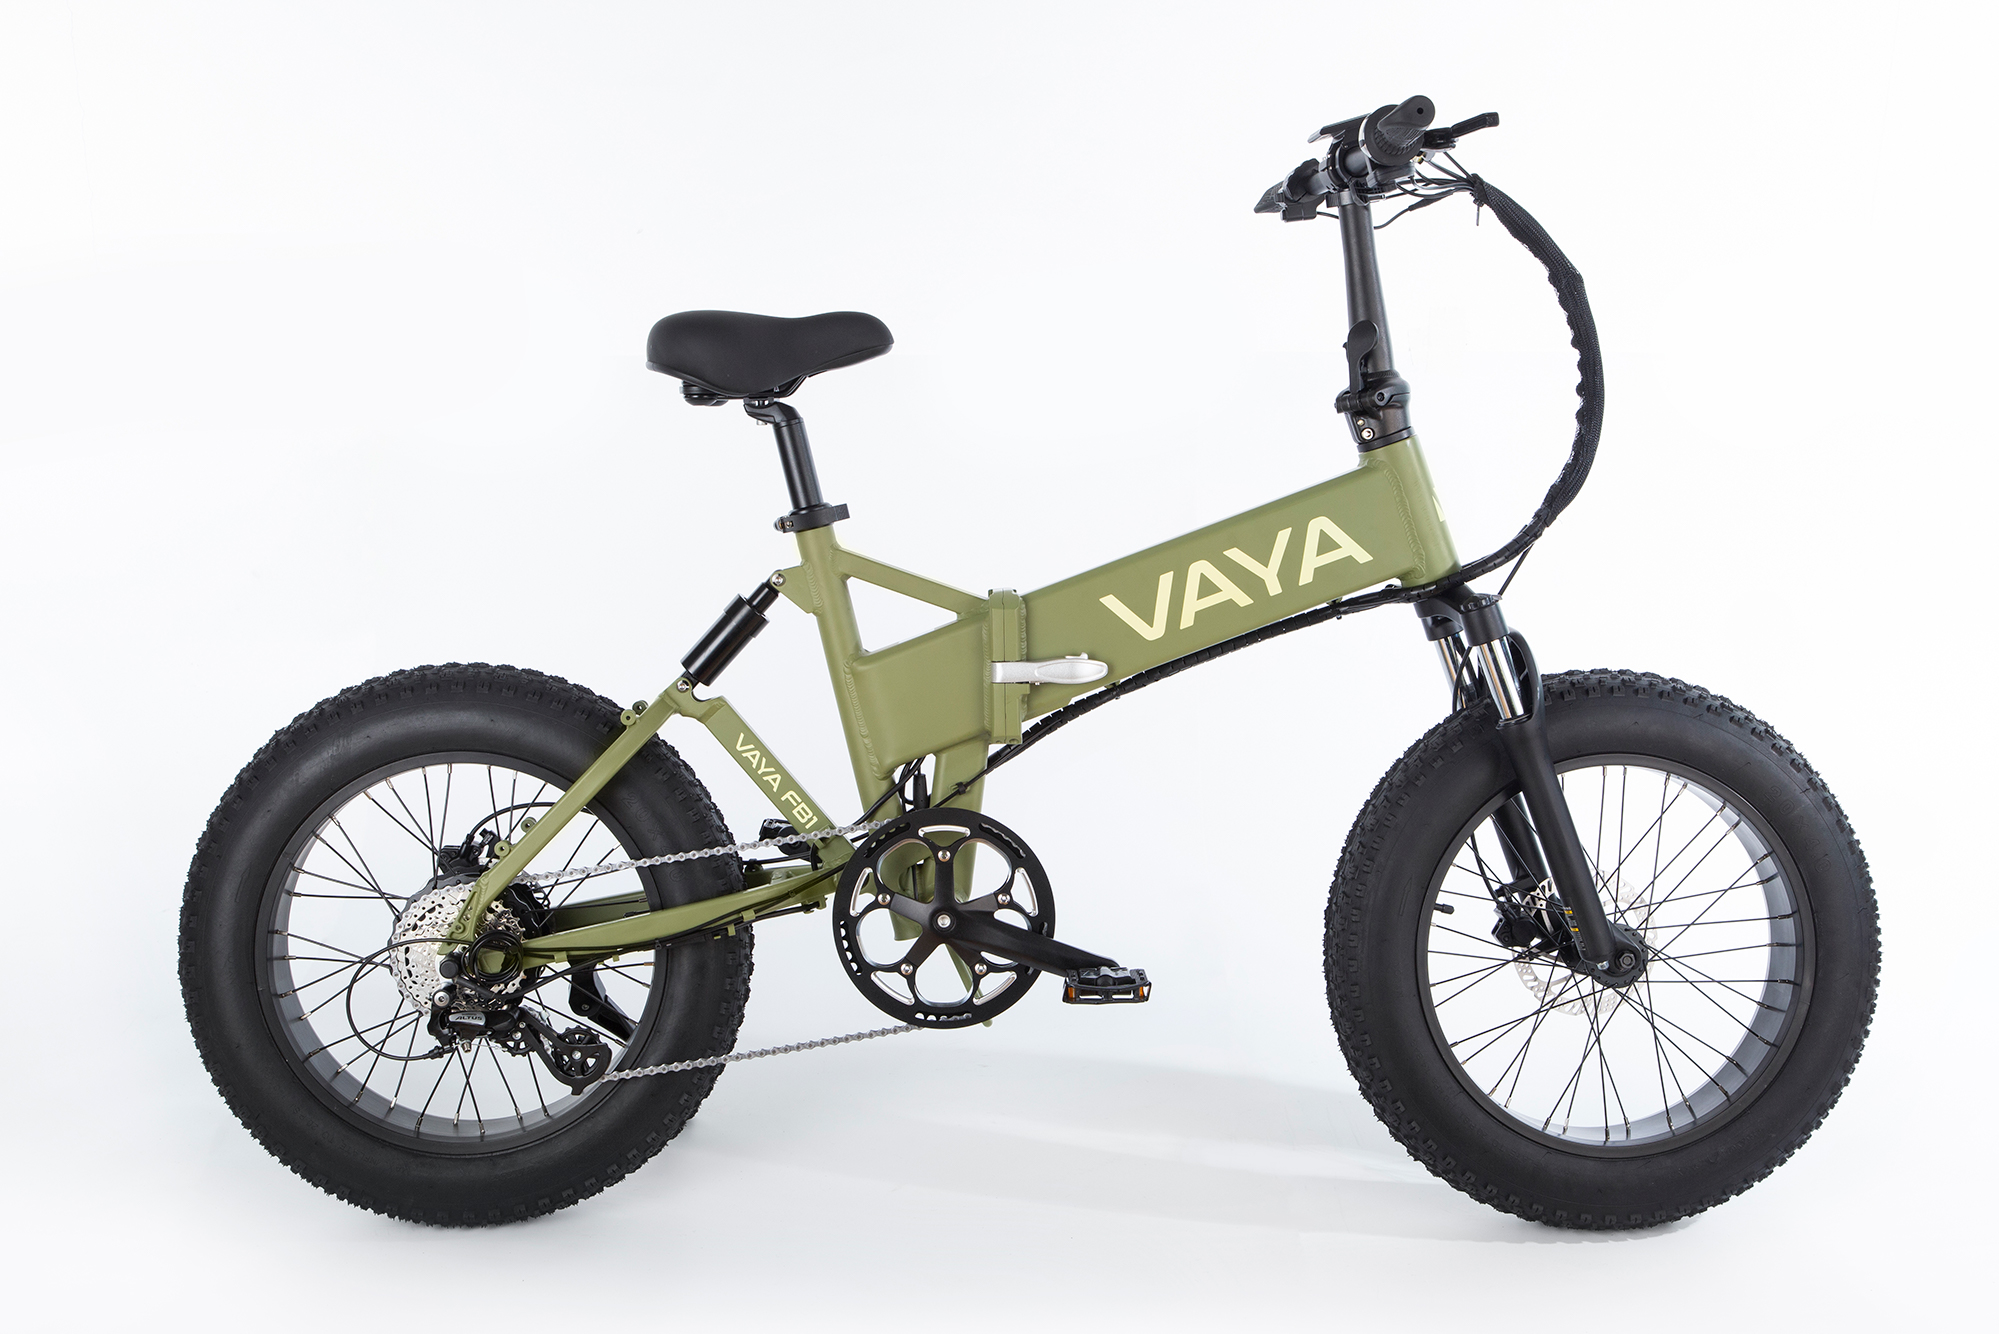 Vaya - Fatbike FB-1 E-Bike - Electric Bike - Army Green (1647AR)